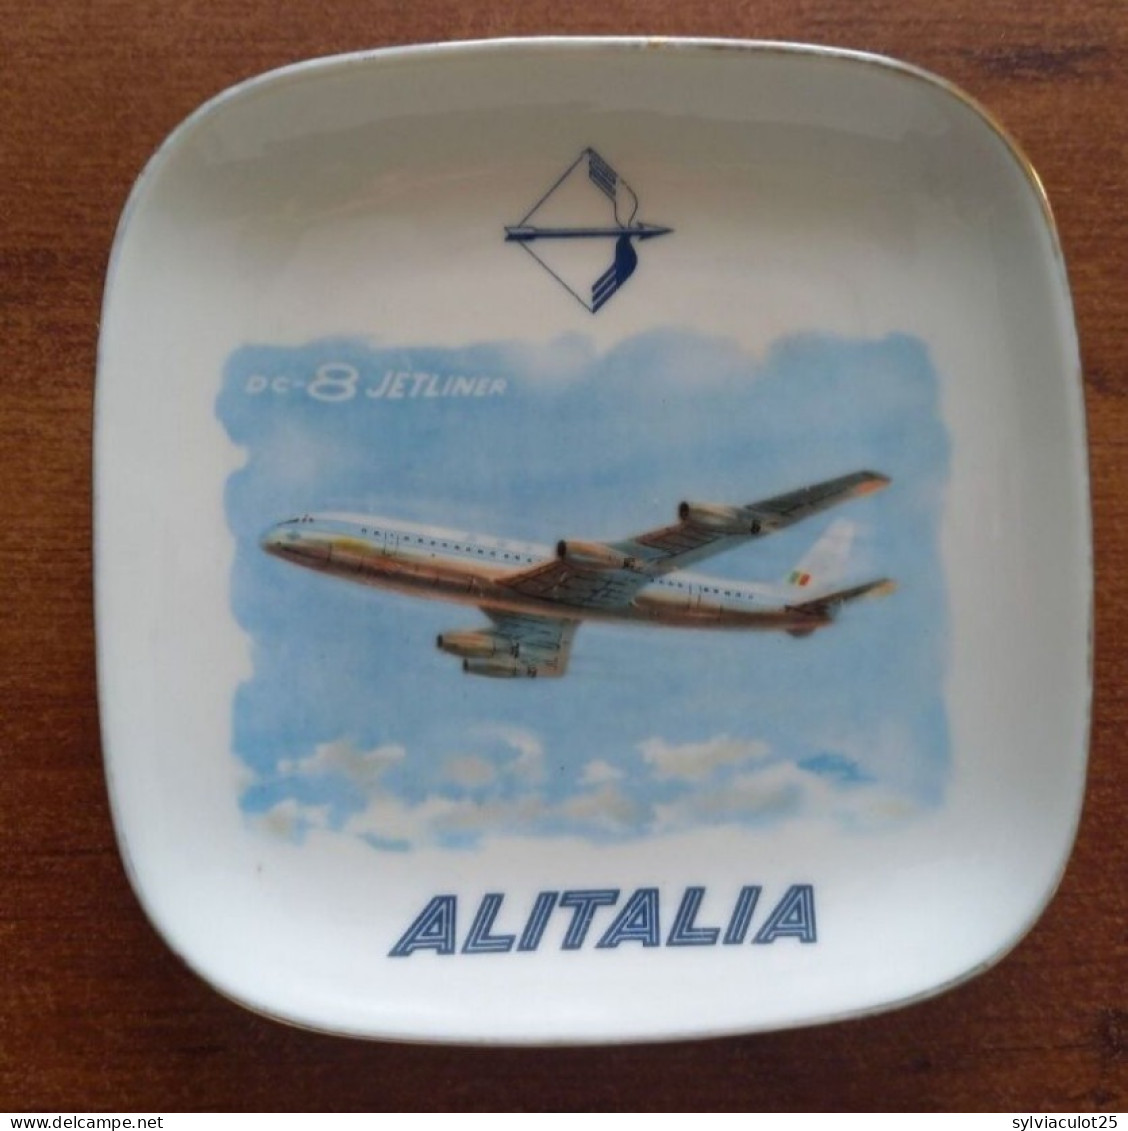 Cendrier POSACENERE Publicité Alitalia - DC-8 JETLINER Ceramica Verbano Vintage - Portacenere